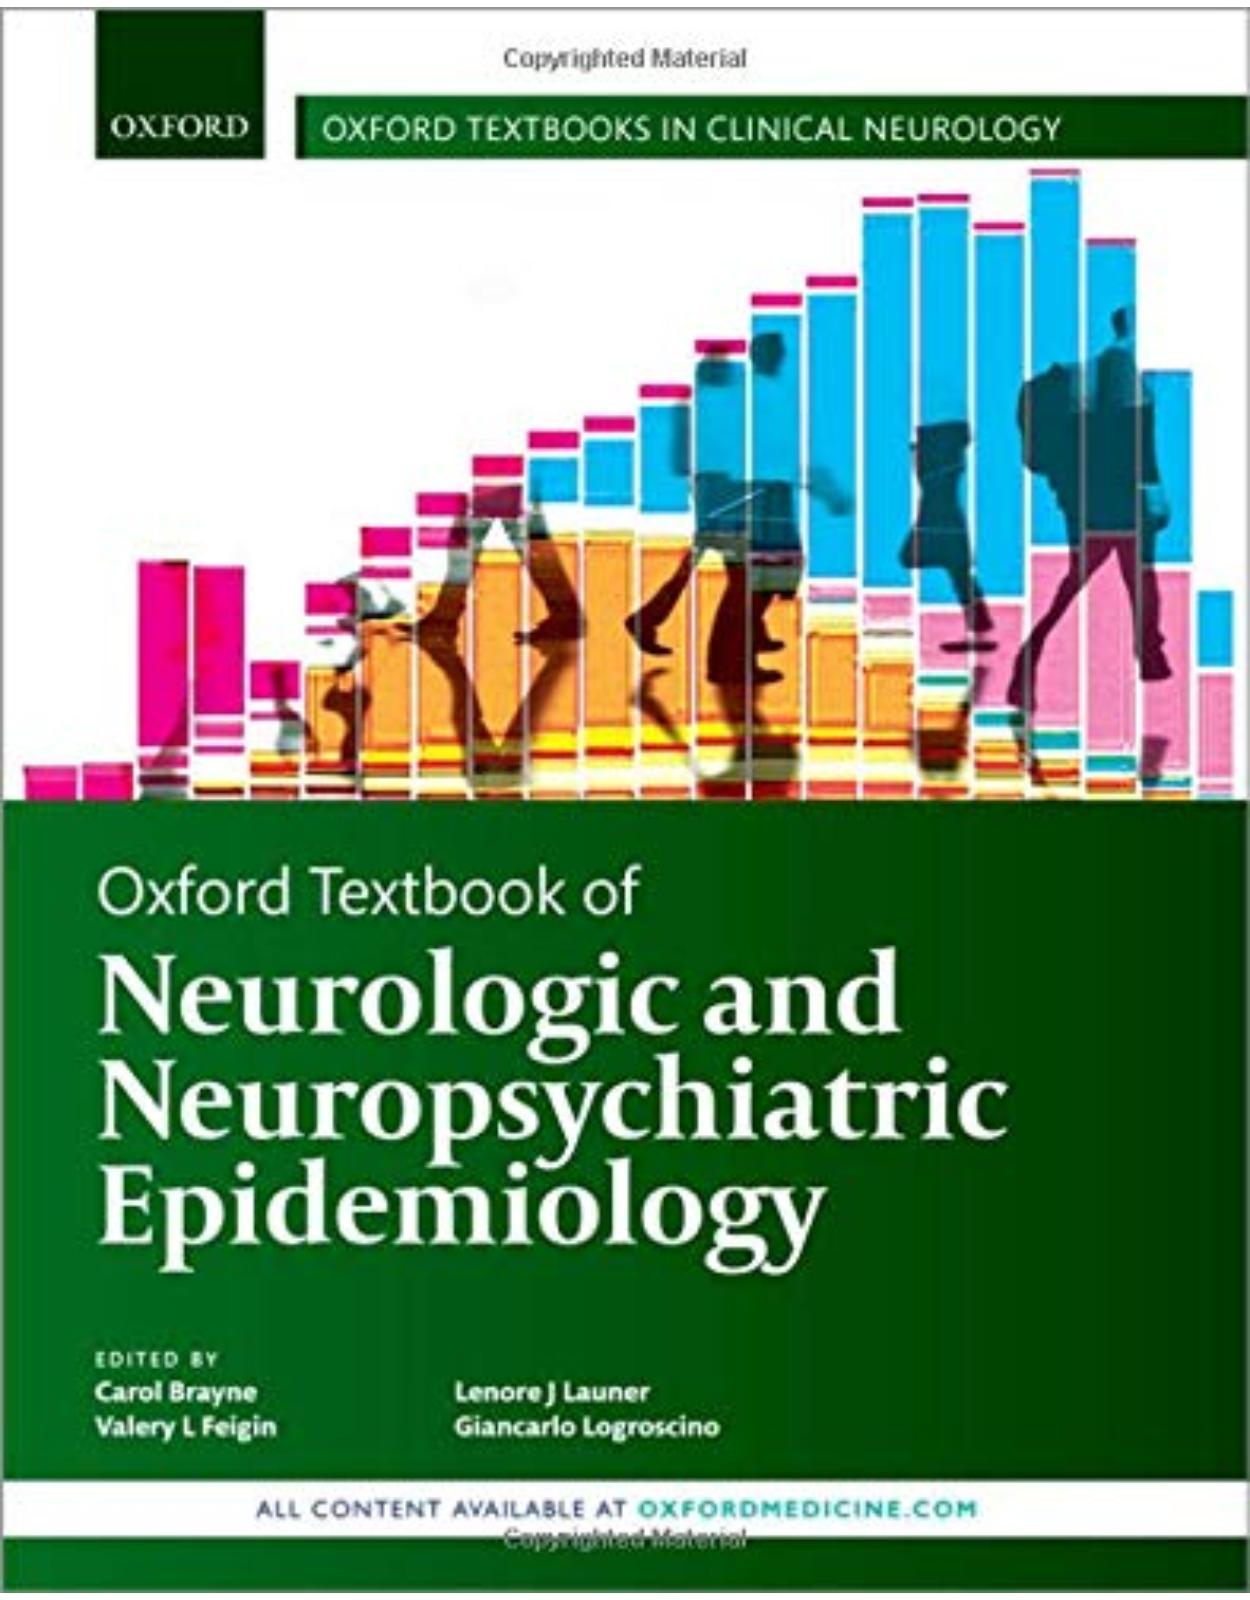 Oxford Textbook of Neurologic and Neuropsychiatric Epidemiology (Oxford Textbooks in Clinical Neurology) 